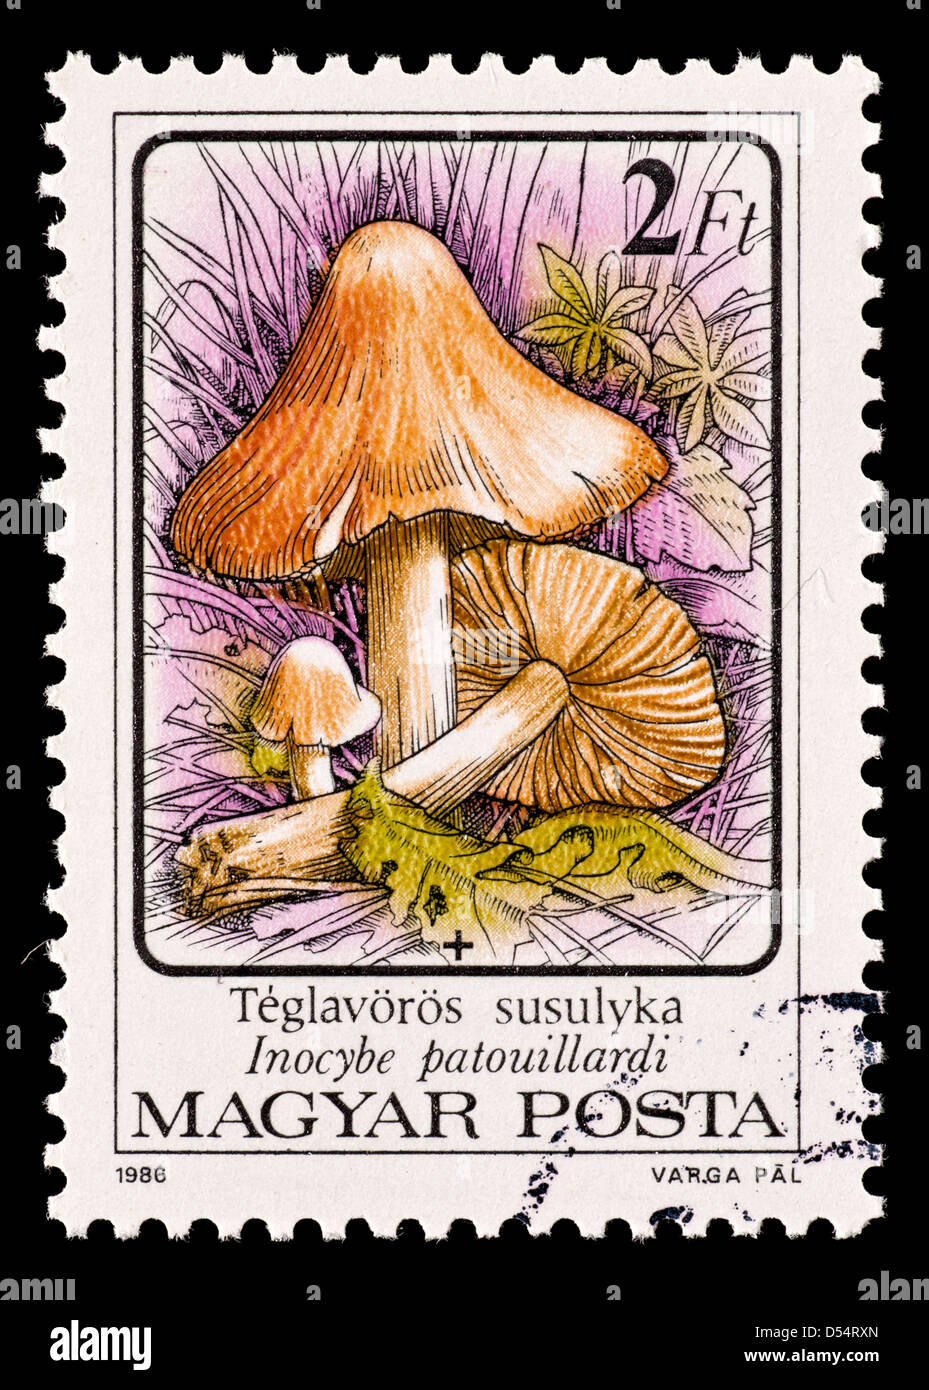 Postage stamp from Hungary depicting a red-staining inocybe mushroom (Inocybe patouillardi) Stock Photo